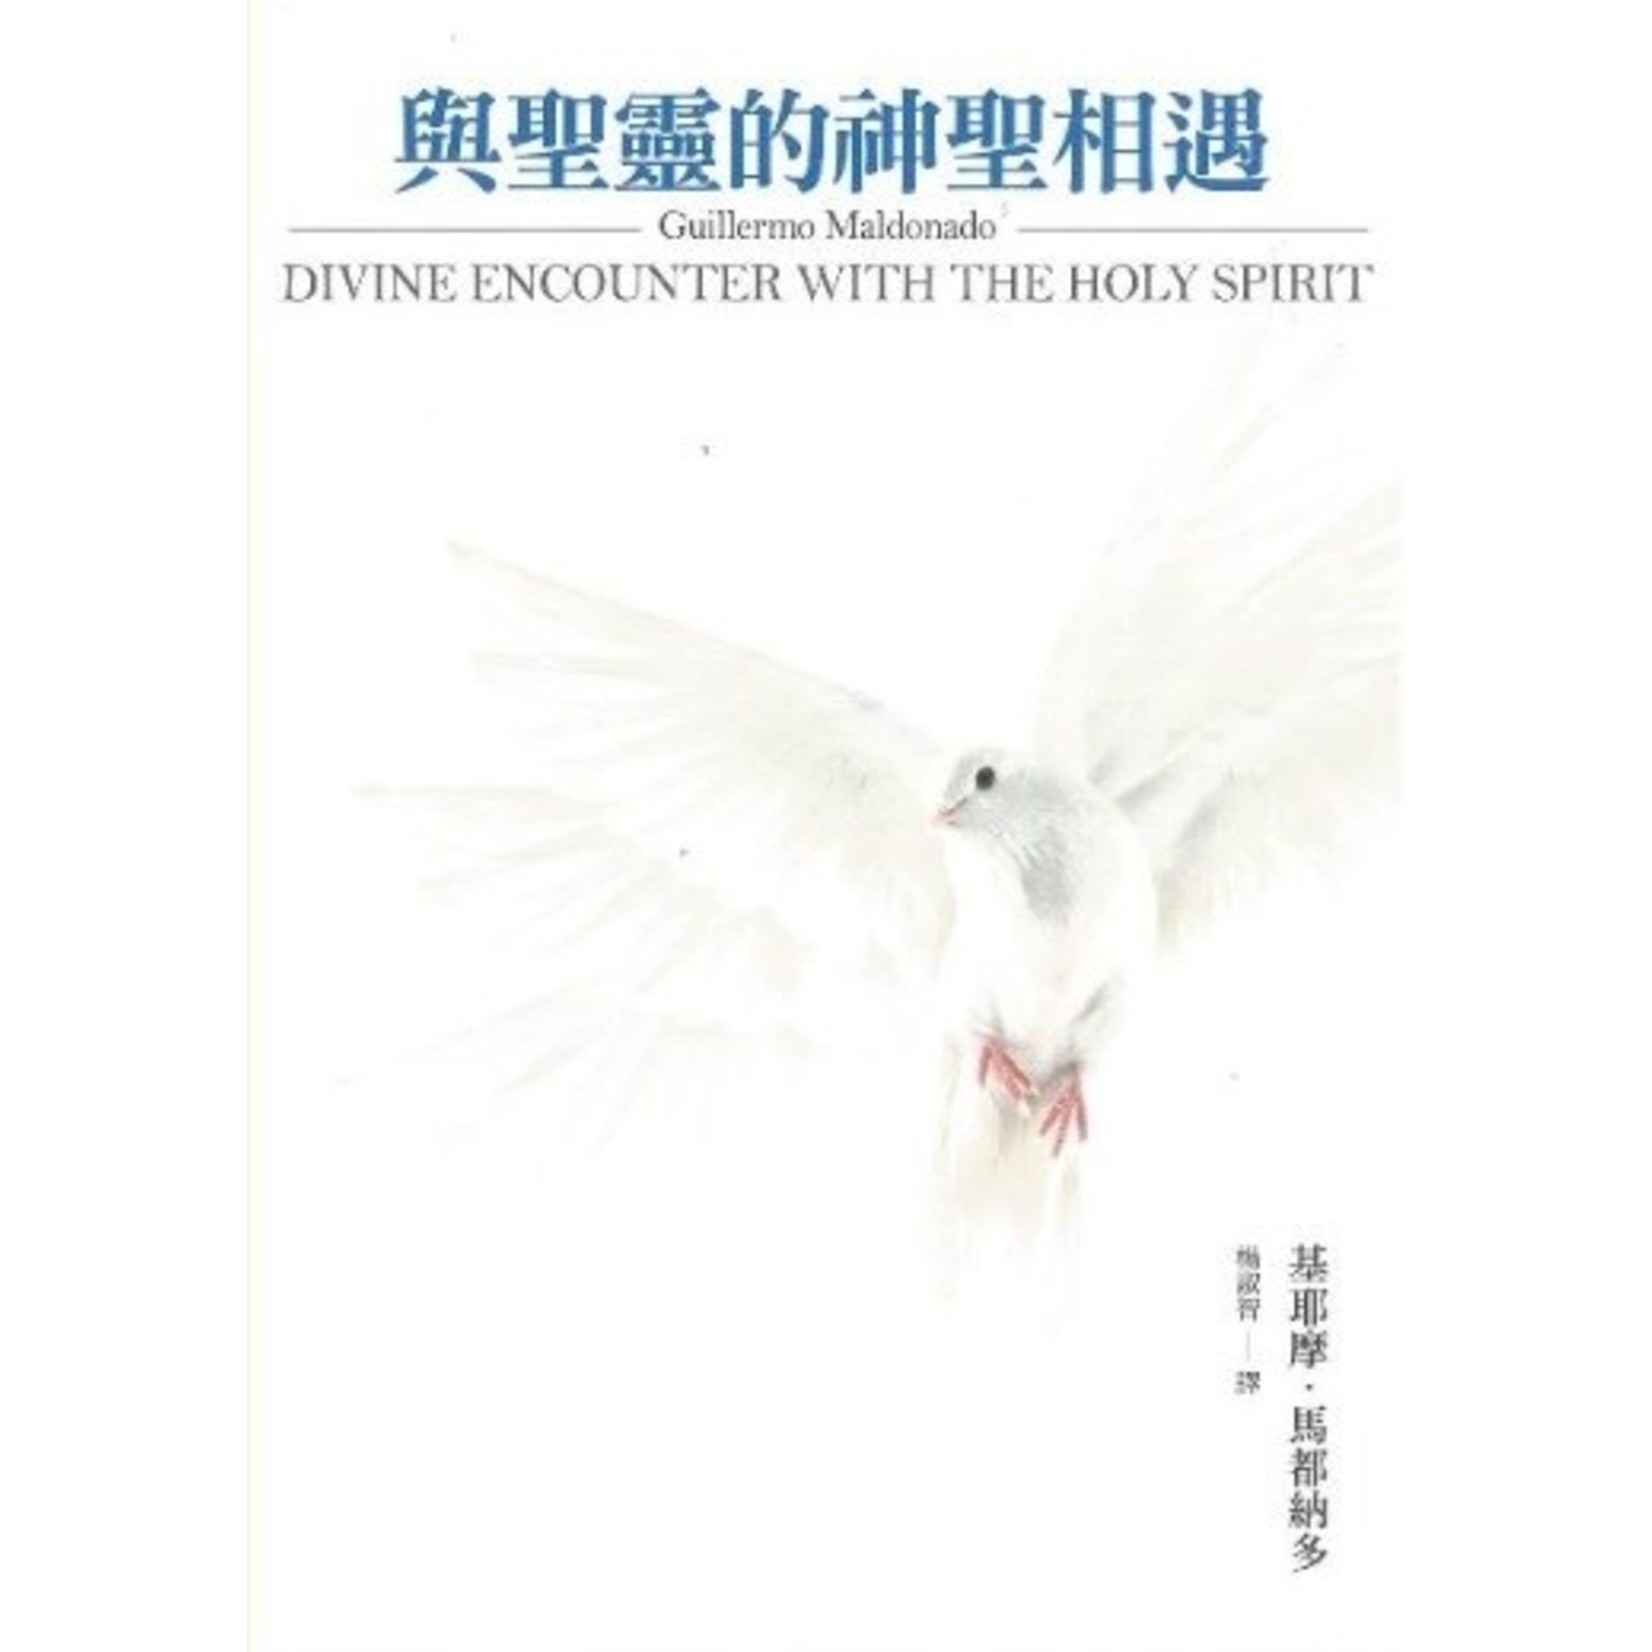 希望之聲 Voice of Hope 與聖靈的神聖相遇 Divine Encounter with the Holy Spirit